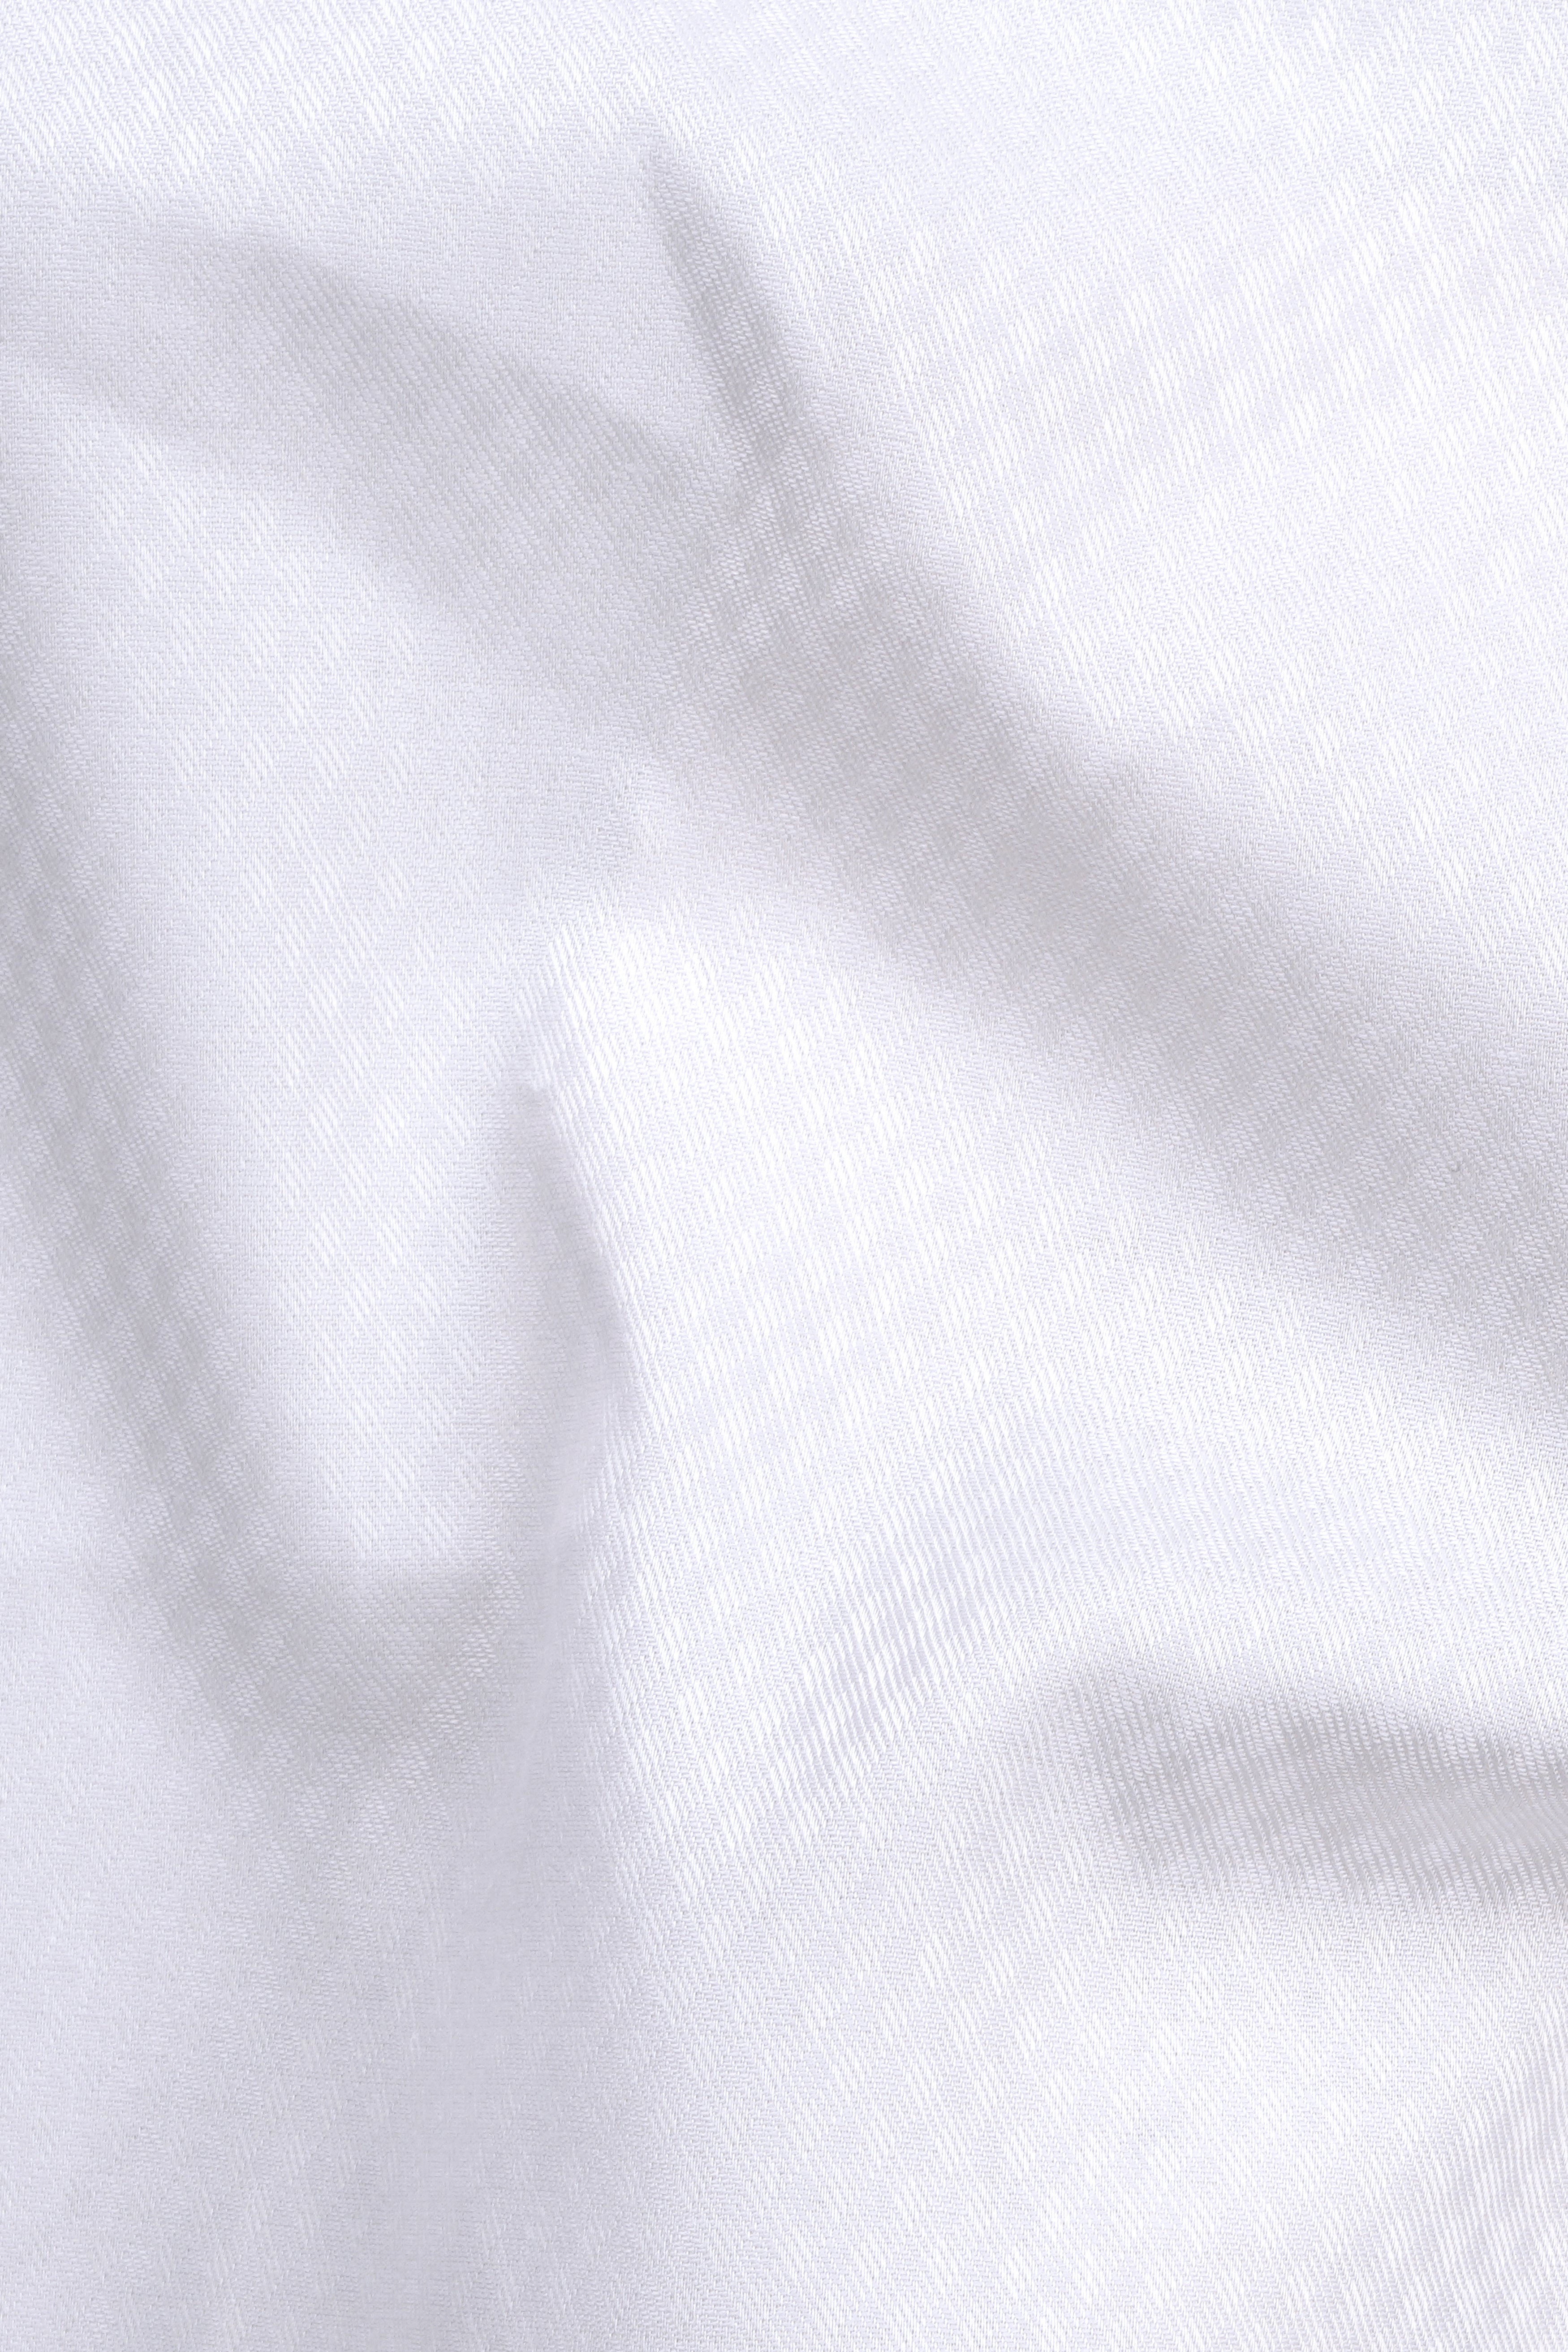 White Smoke Subtle Rhombus Printed Premium Cotton Shirt